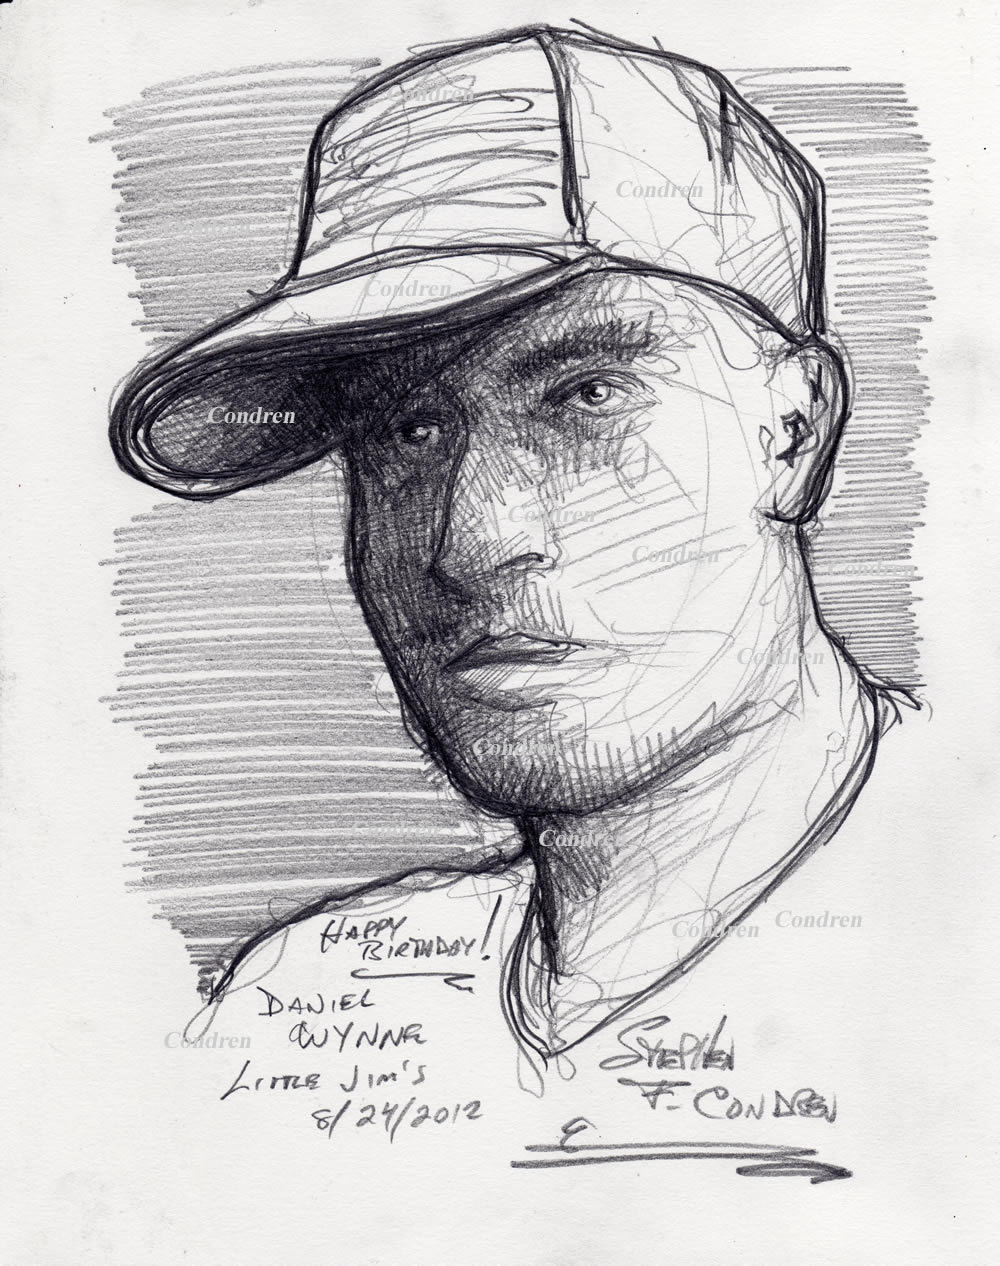 Daniel Wynne #321Z or gay bar patron, pencil portrait or stylus portrayal, by artist Stephen F. Condren, of Condren Galleries, with LBGTQ Gay prints, and scans.